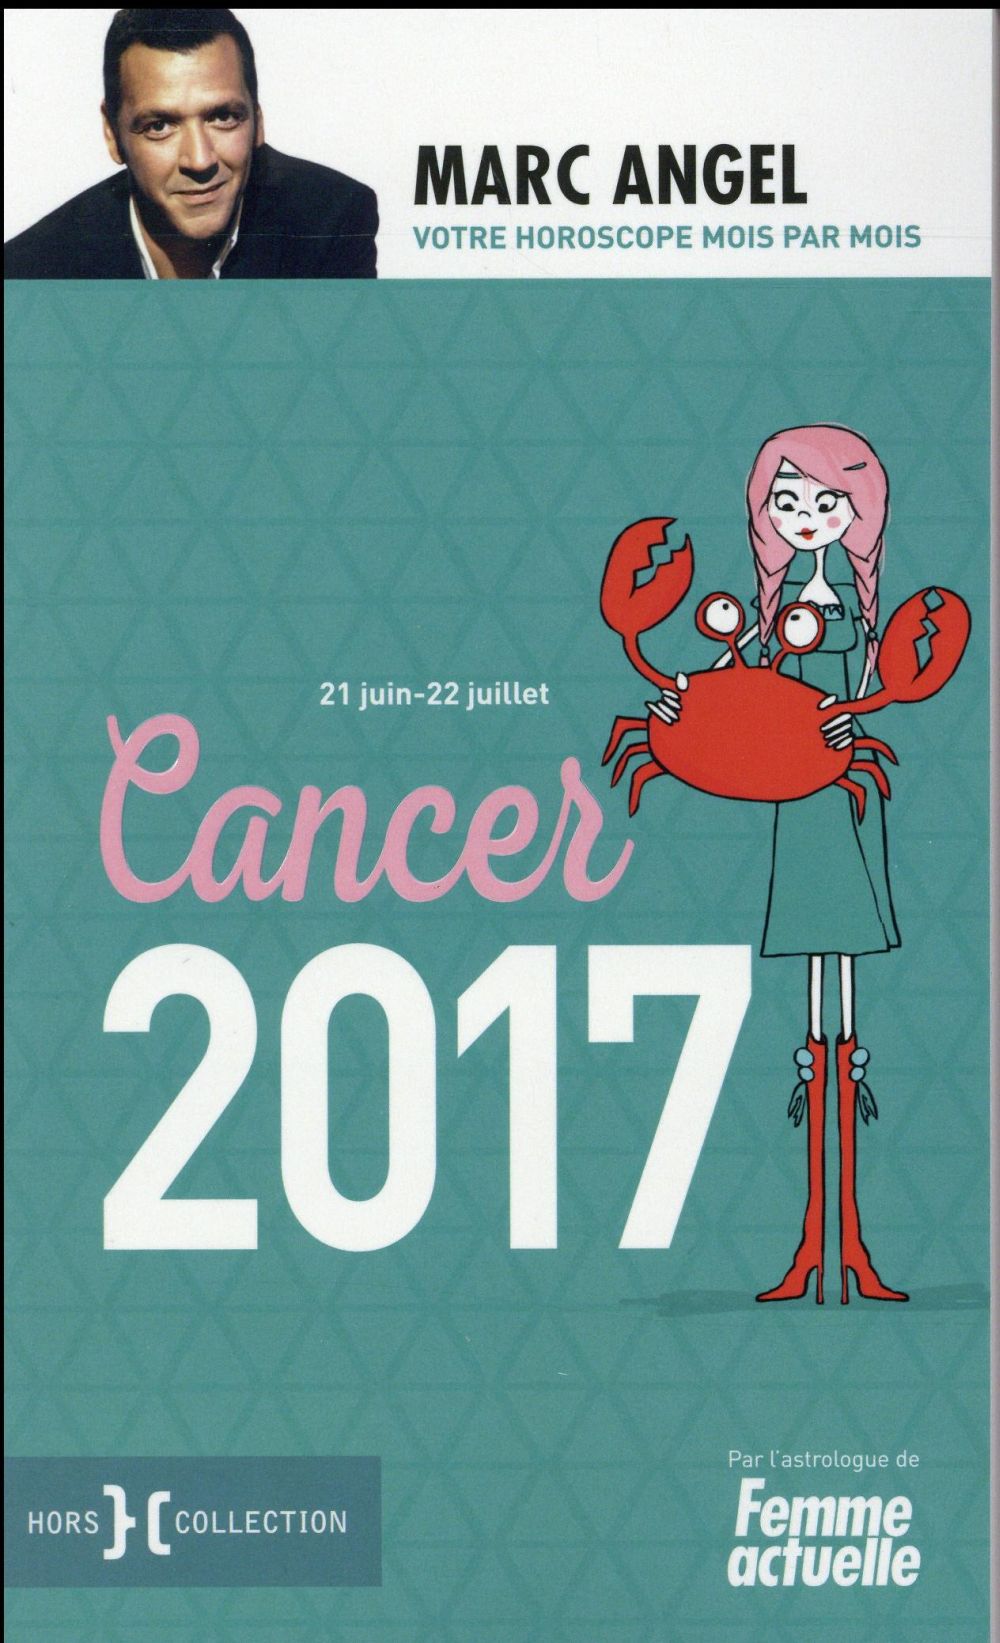 CANCER 2017